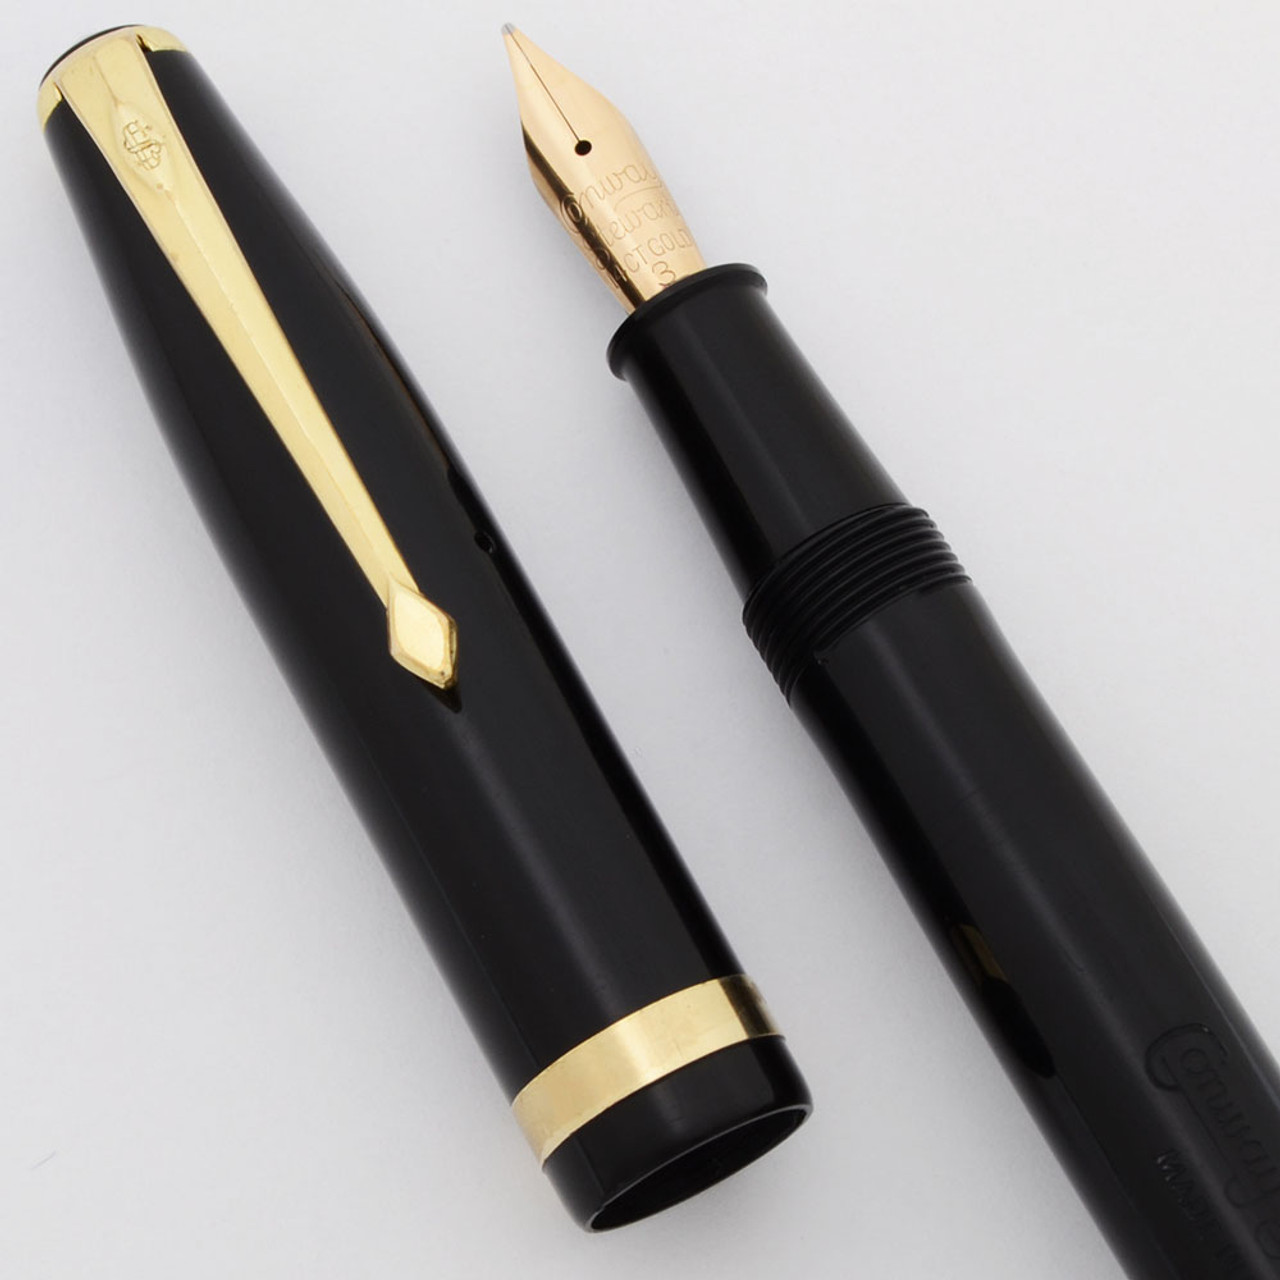 Conway Stewart 85L Fountain Pen (1950s) - Black w/Gold Trim, Lever Filler,  Medium Flexible 14k Nib (Excellent, Restored)